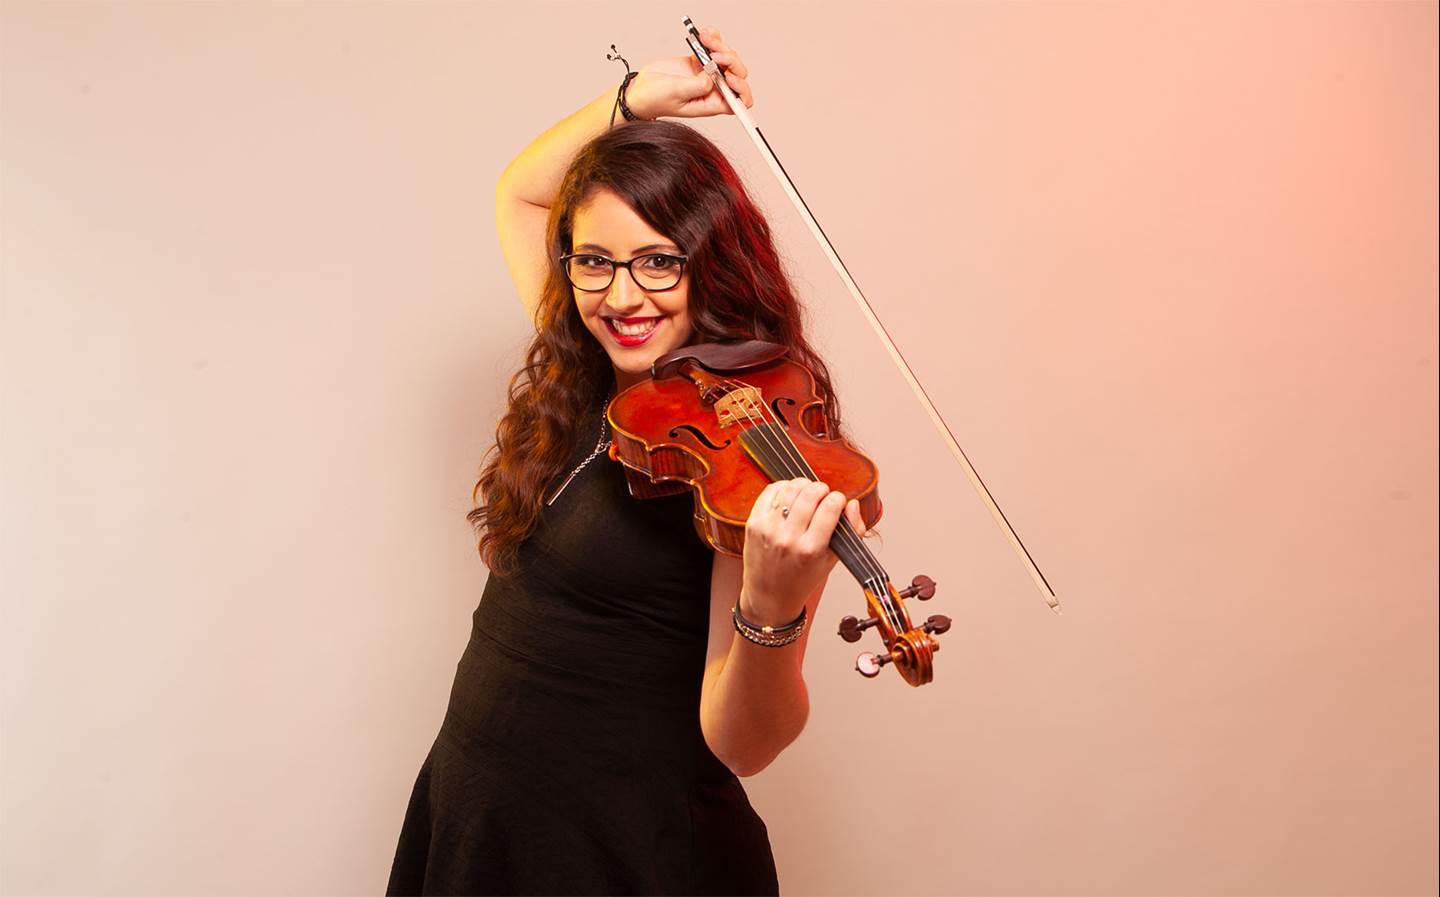 Daniela Padr&#243;n wearing a black dress smiling with a violin.